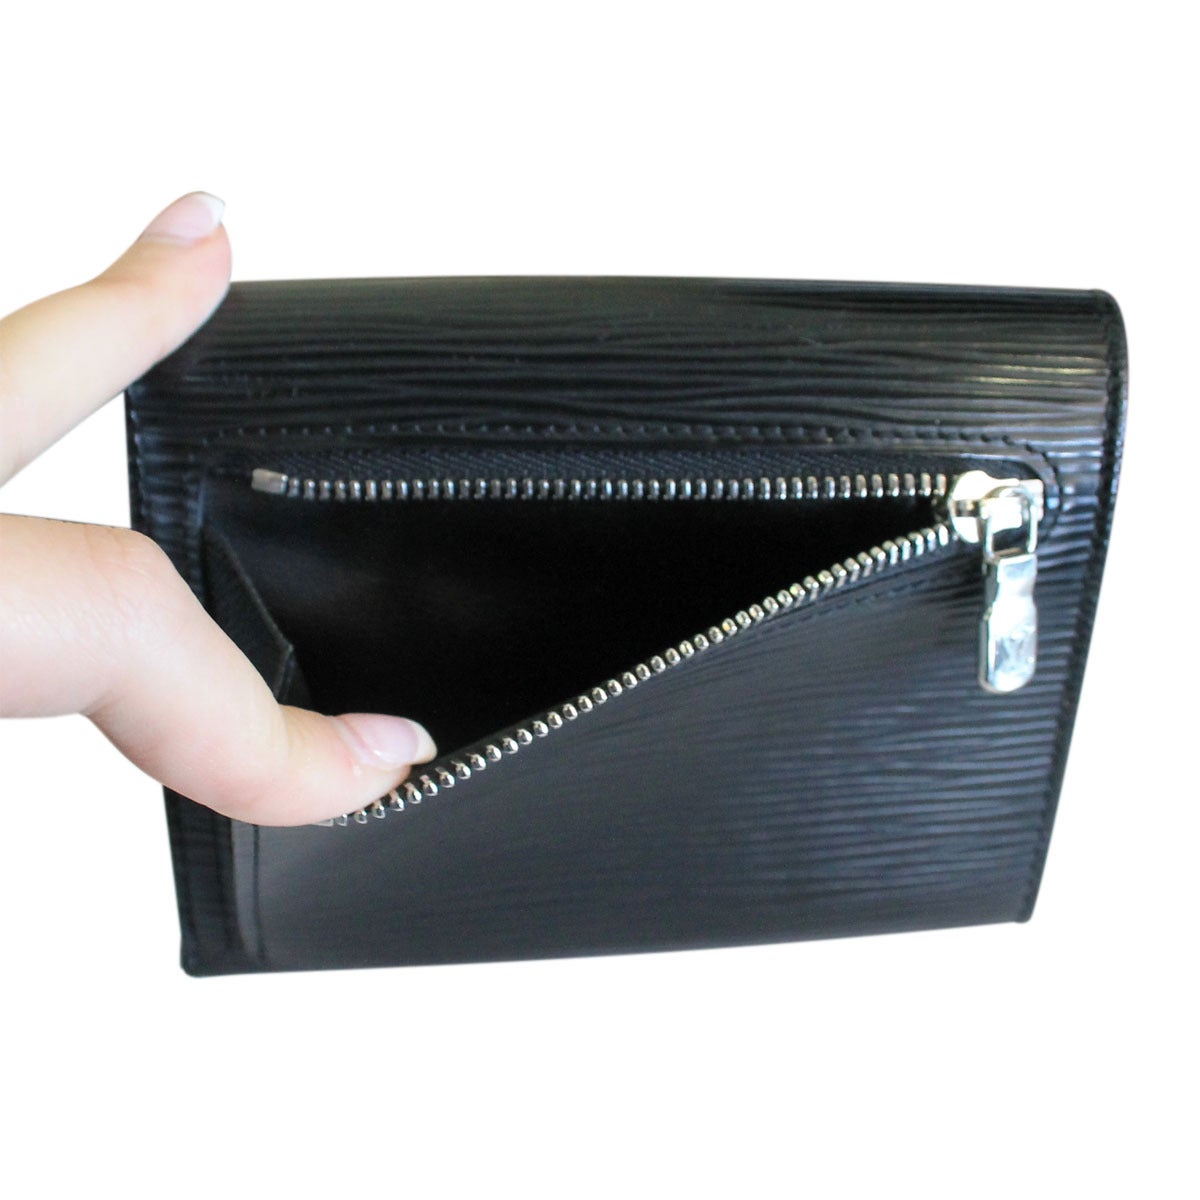 Brand: Louis Vuitton
Style: Bi Fold with Push Clasp
Wallet Measurements: 5